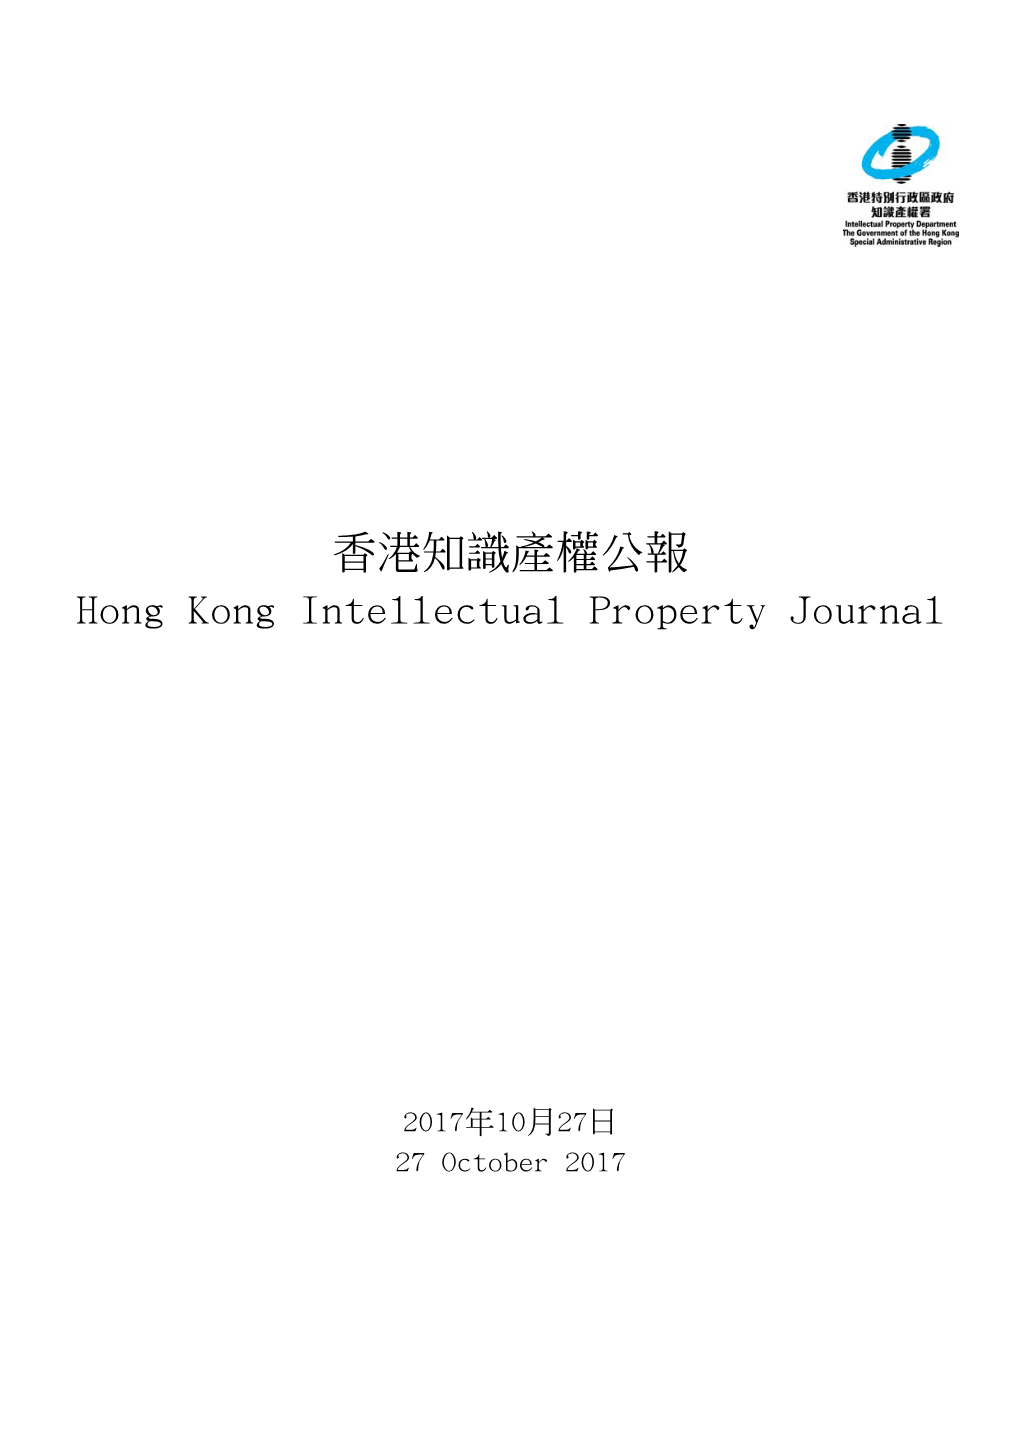 香港知識產權公報hong Kong Intellectual Property Journal Docslib